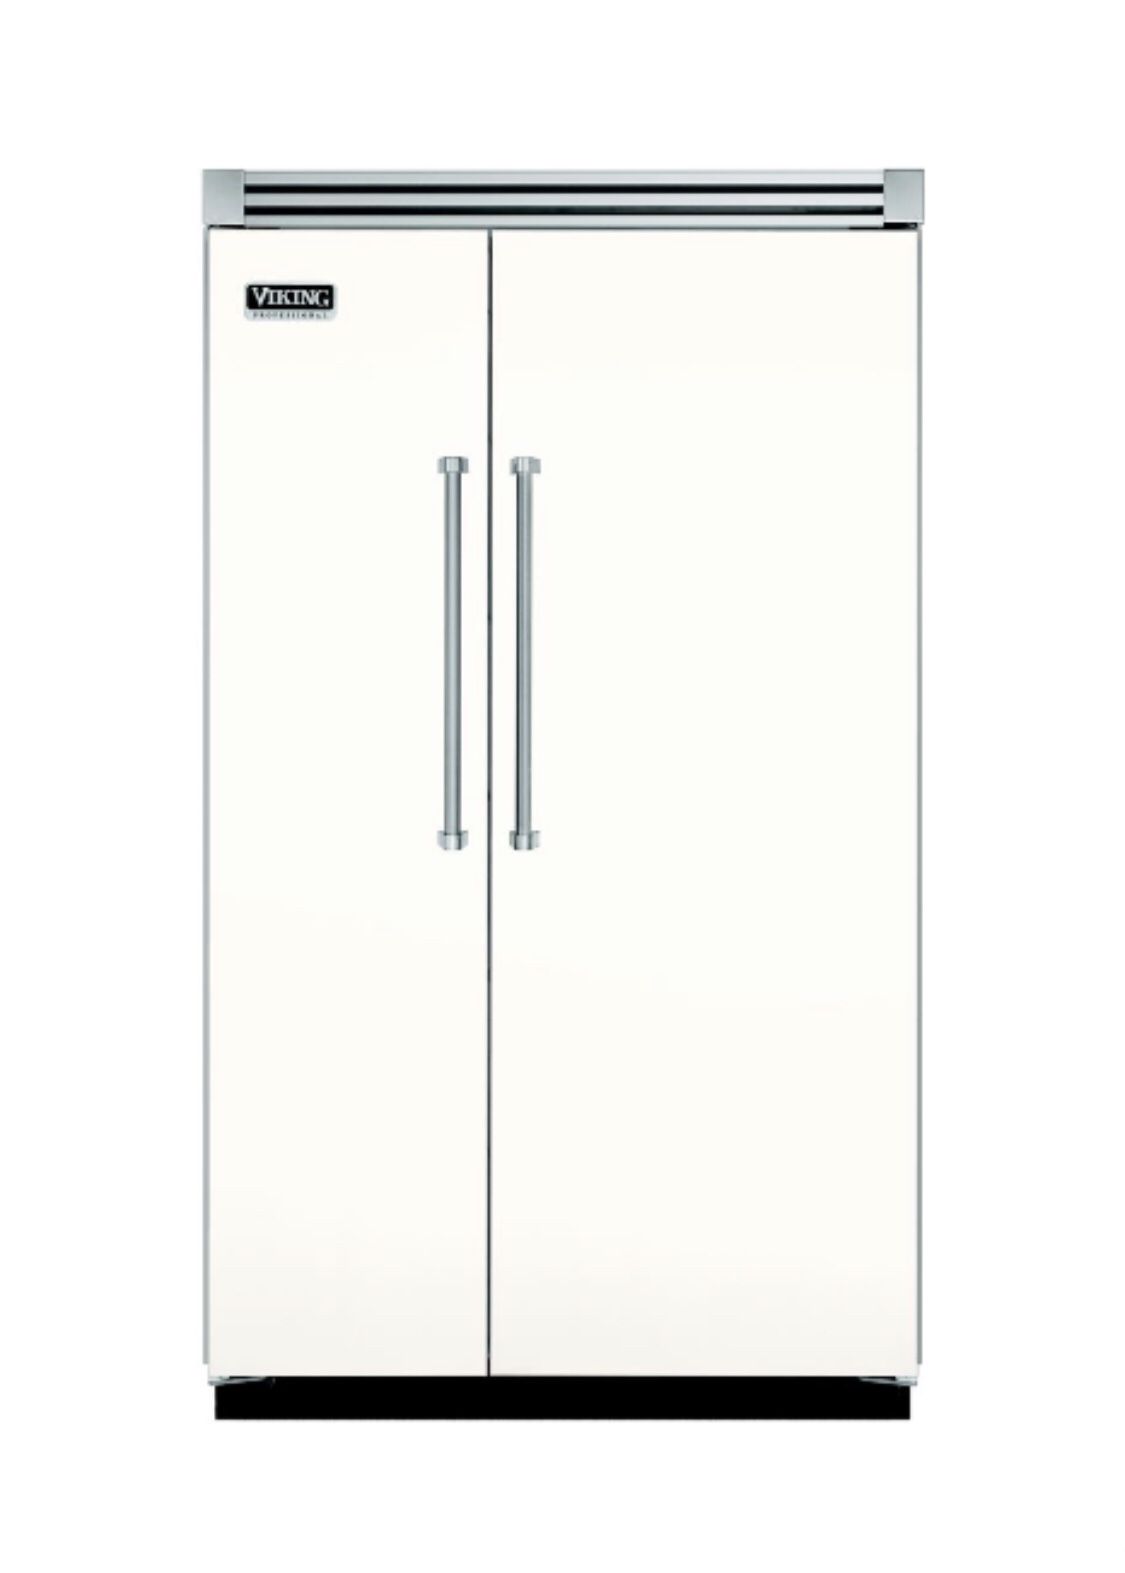 Viking 48” Counter Depth Refrigerator like new Side-by-Side Refrigerator/Freezer